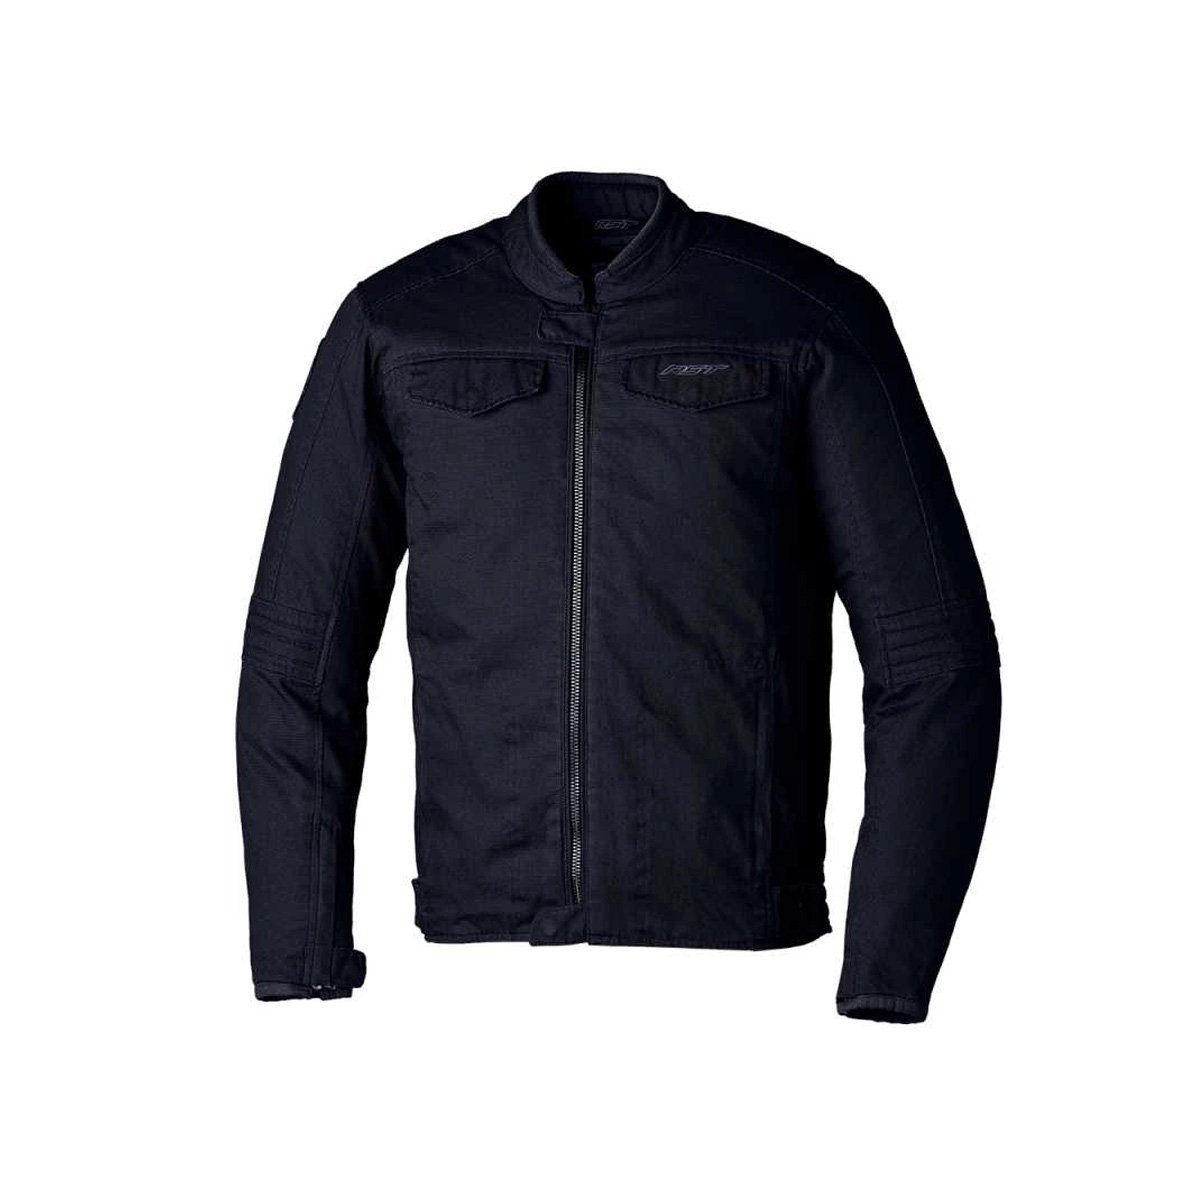 Image of RST IOM TT Crosby 2 CE Textile Jacket Men Black Talla 40